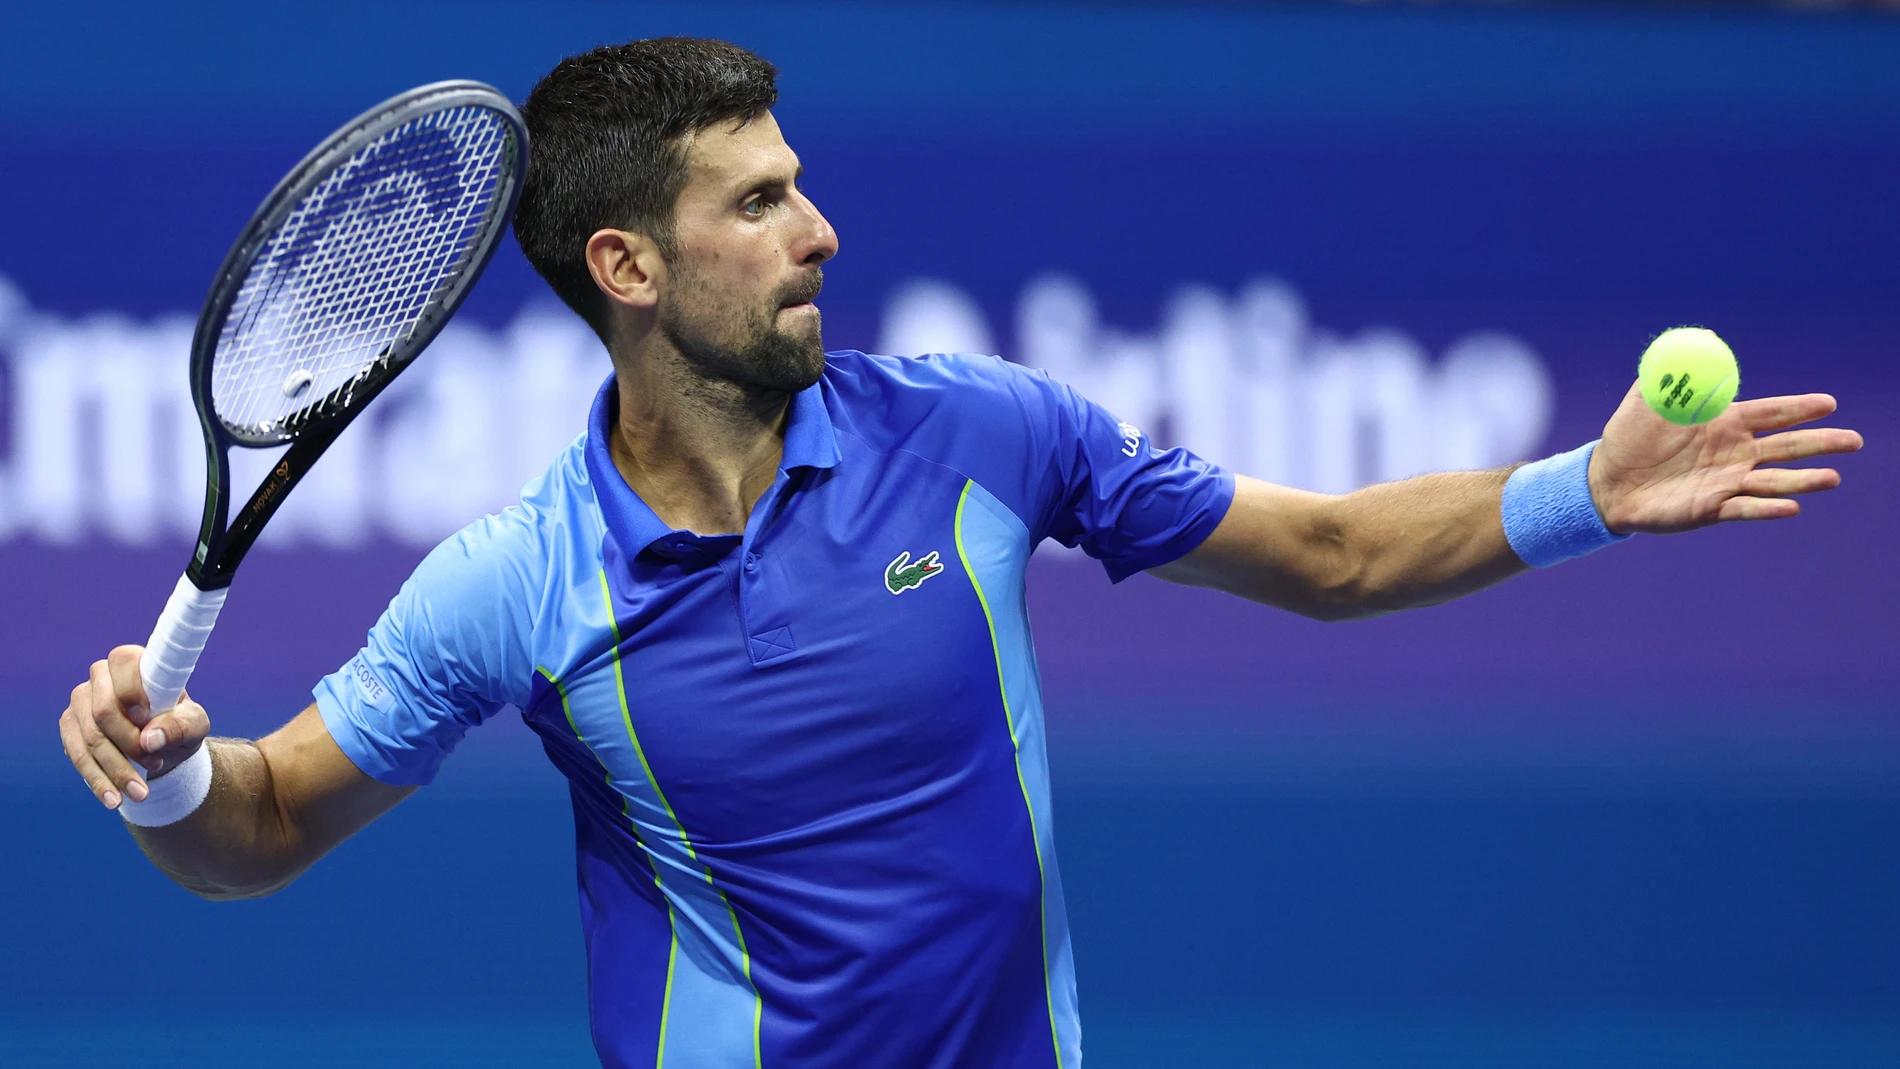 El entrenador de Djokovic desvela su curiosa manera de motivar a Novak: "Es bueno discutir"